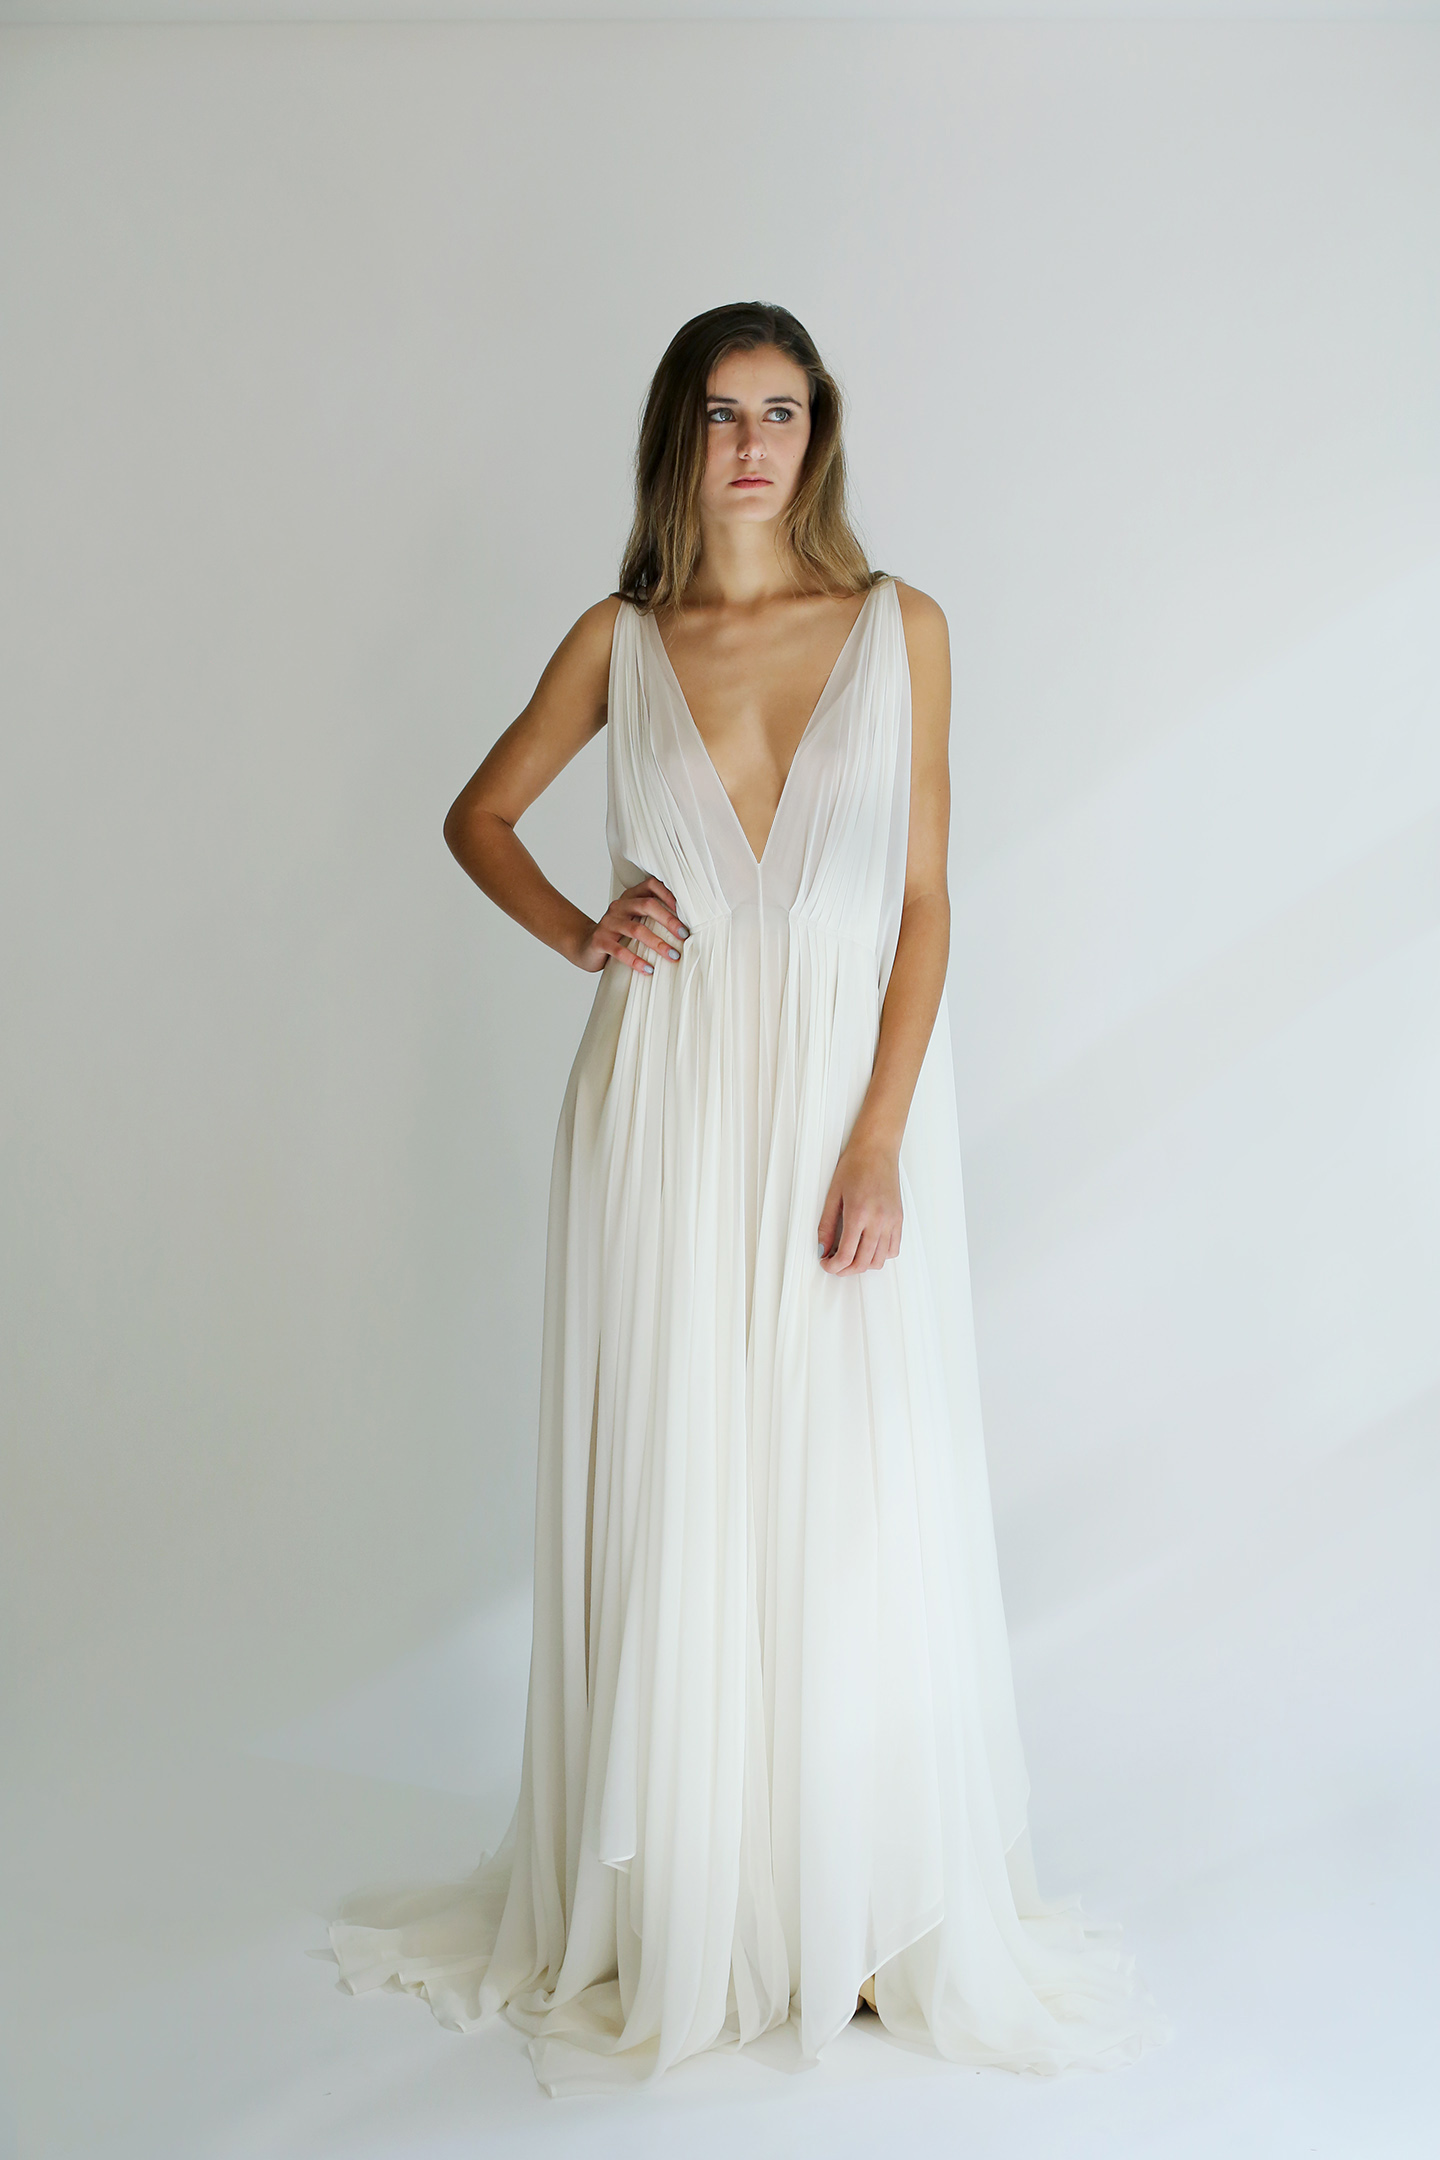 woman wearing a long low cut white formal dress